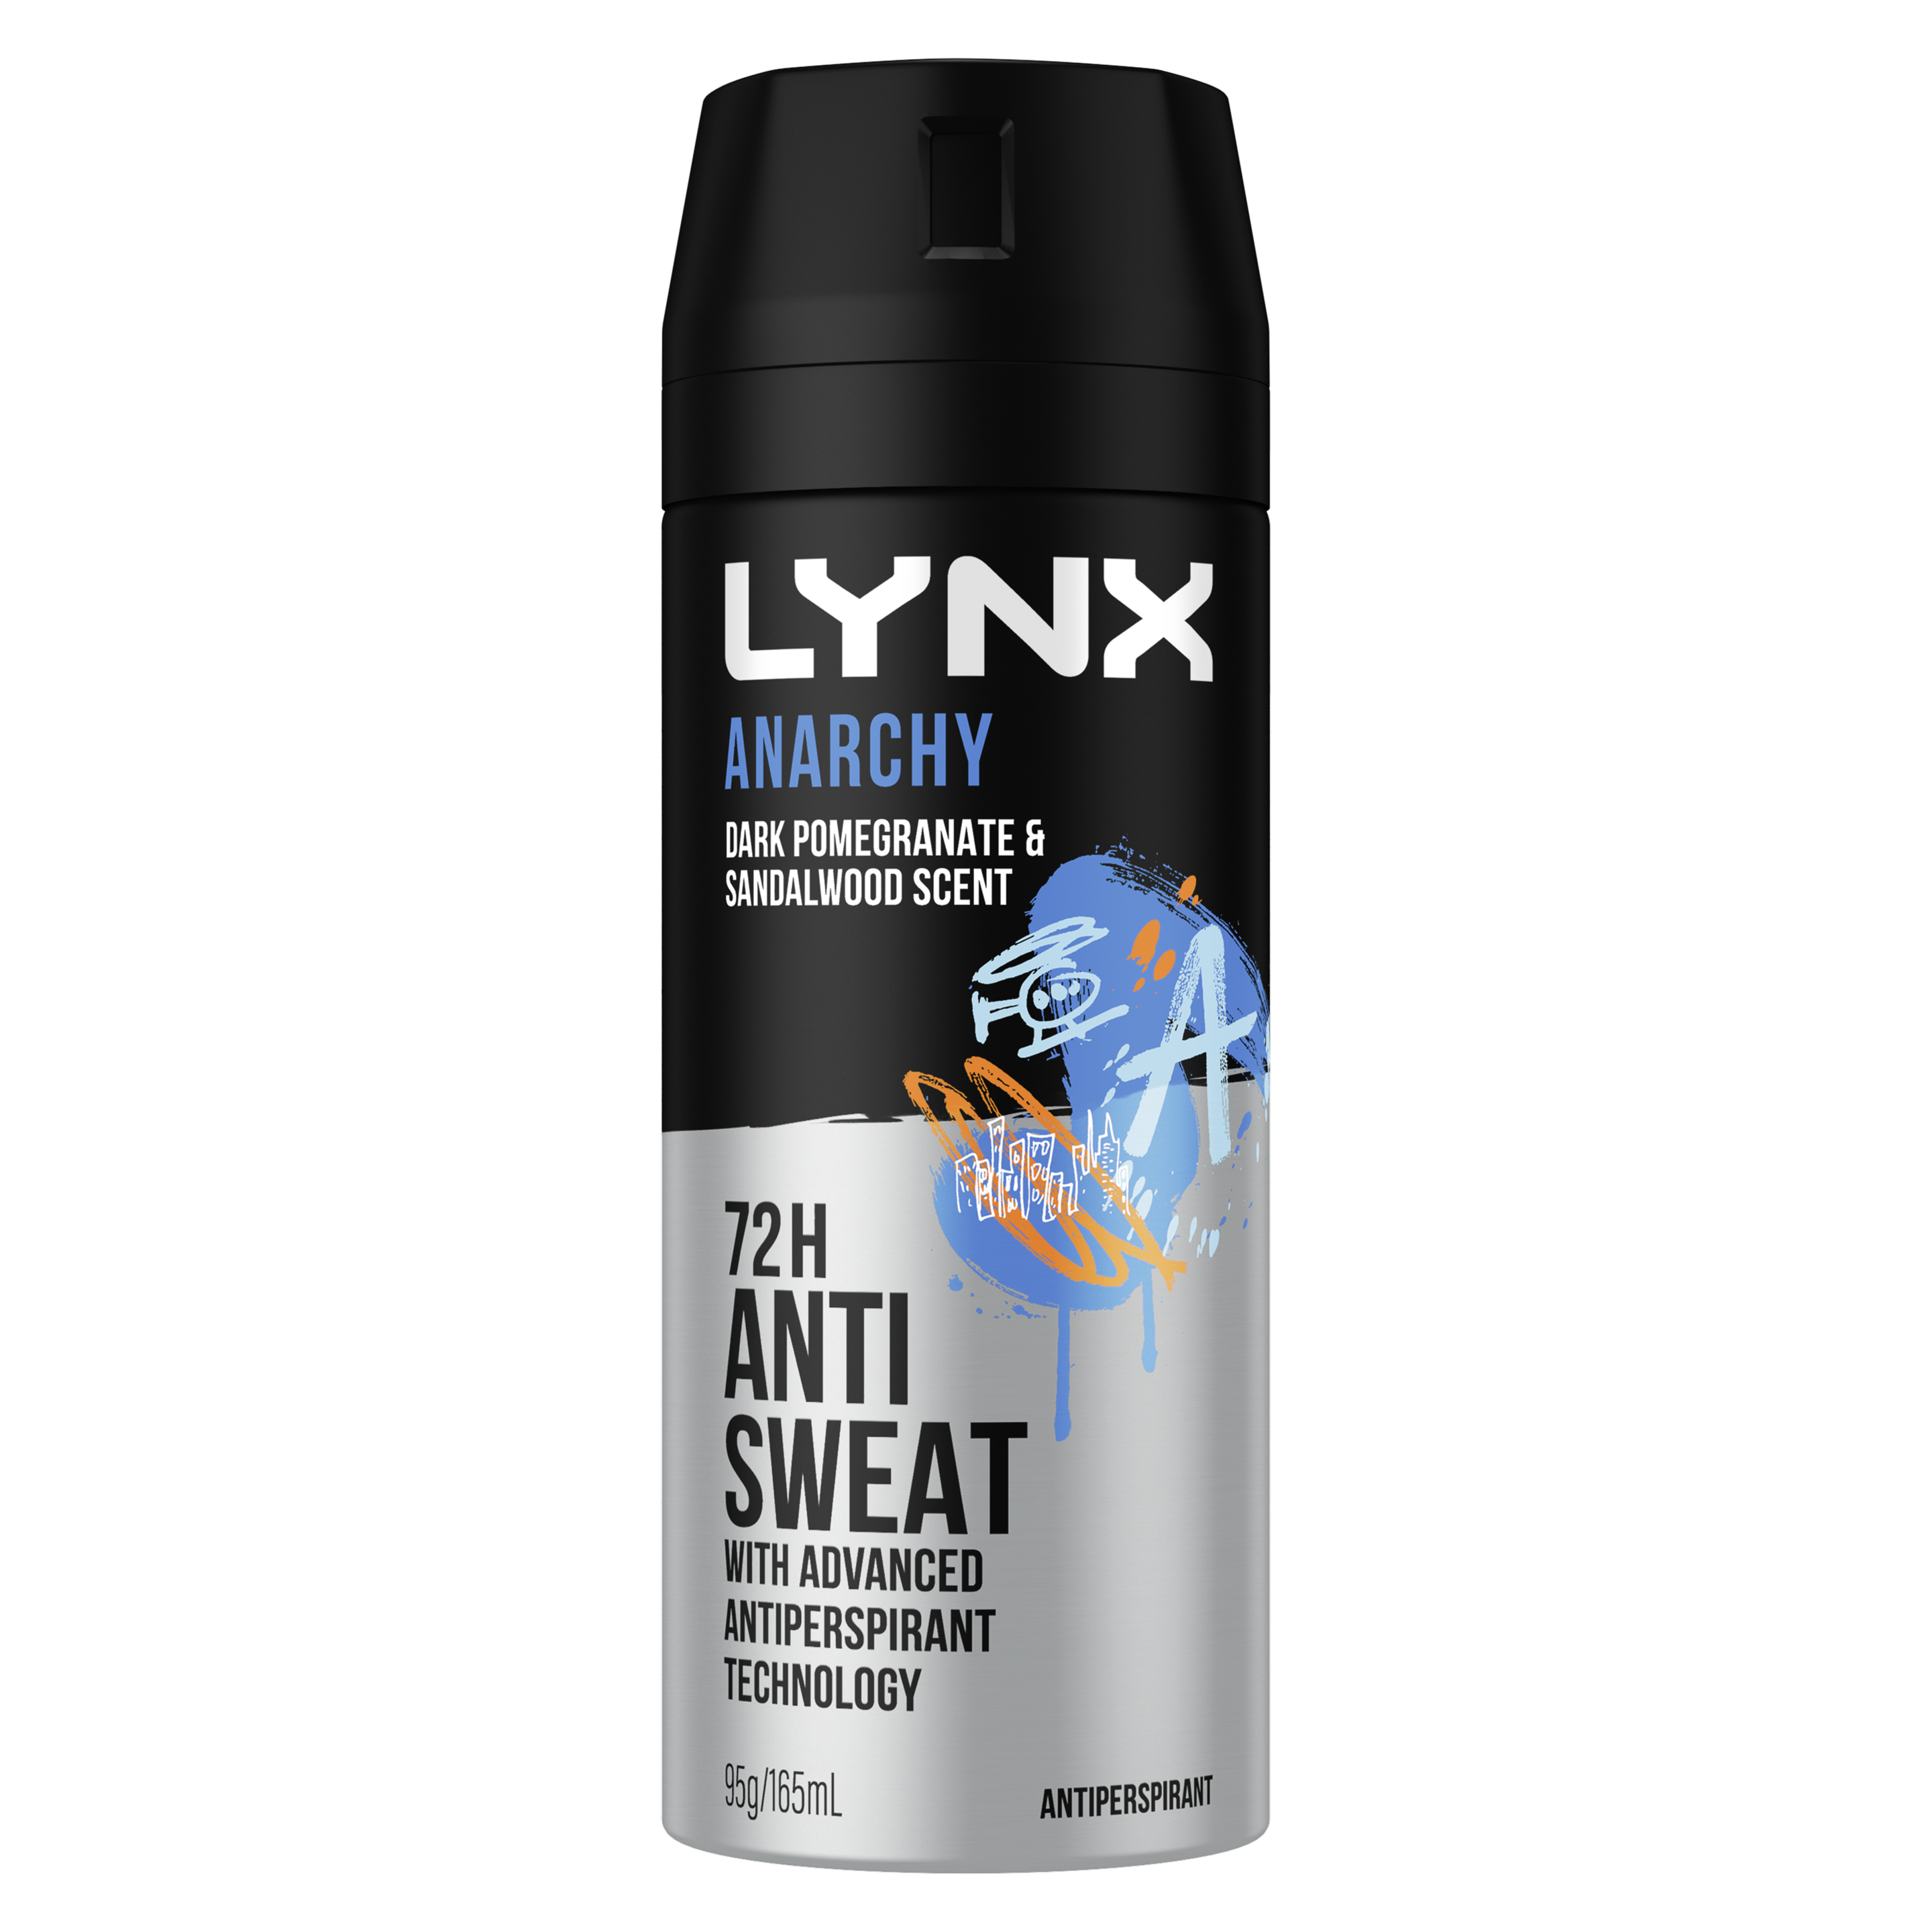 Lynx Anarchy Antiperspirant